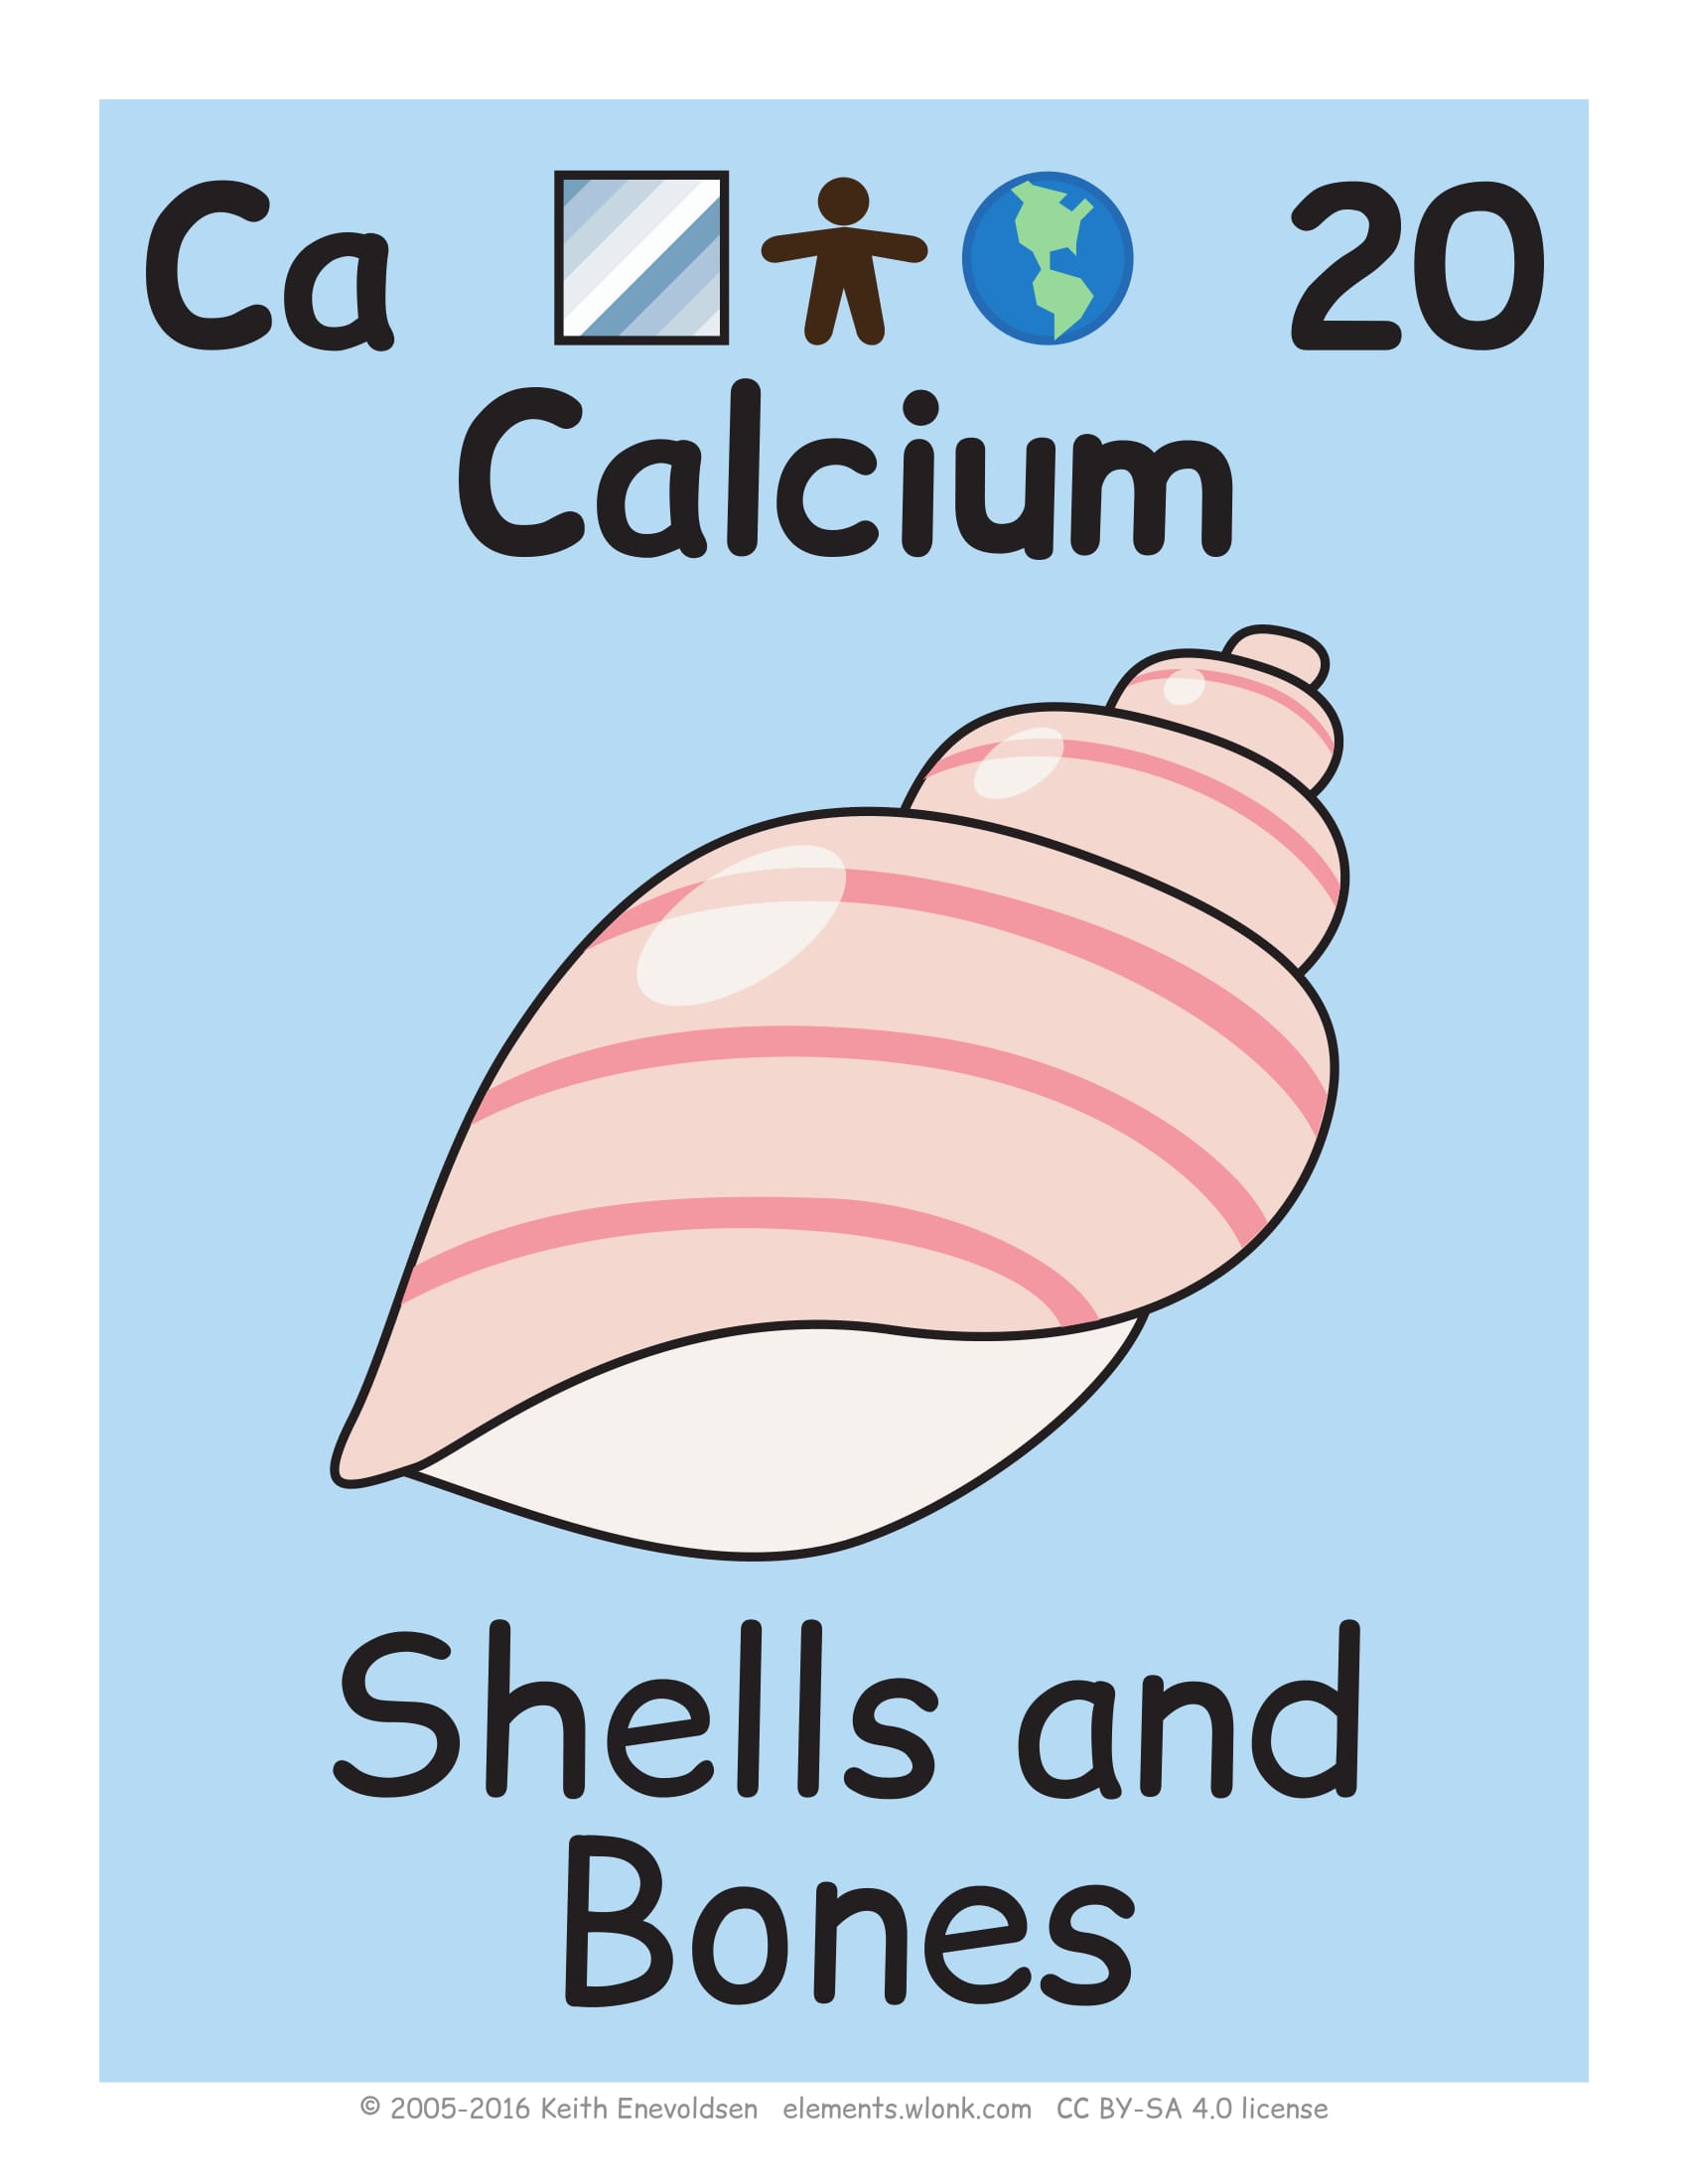 Calcium chemical element flashcard free printable papercraft templates